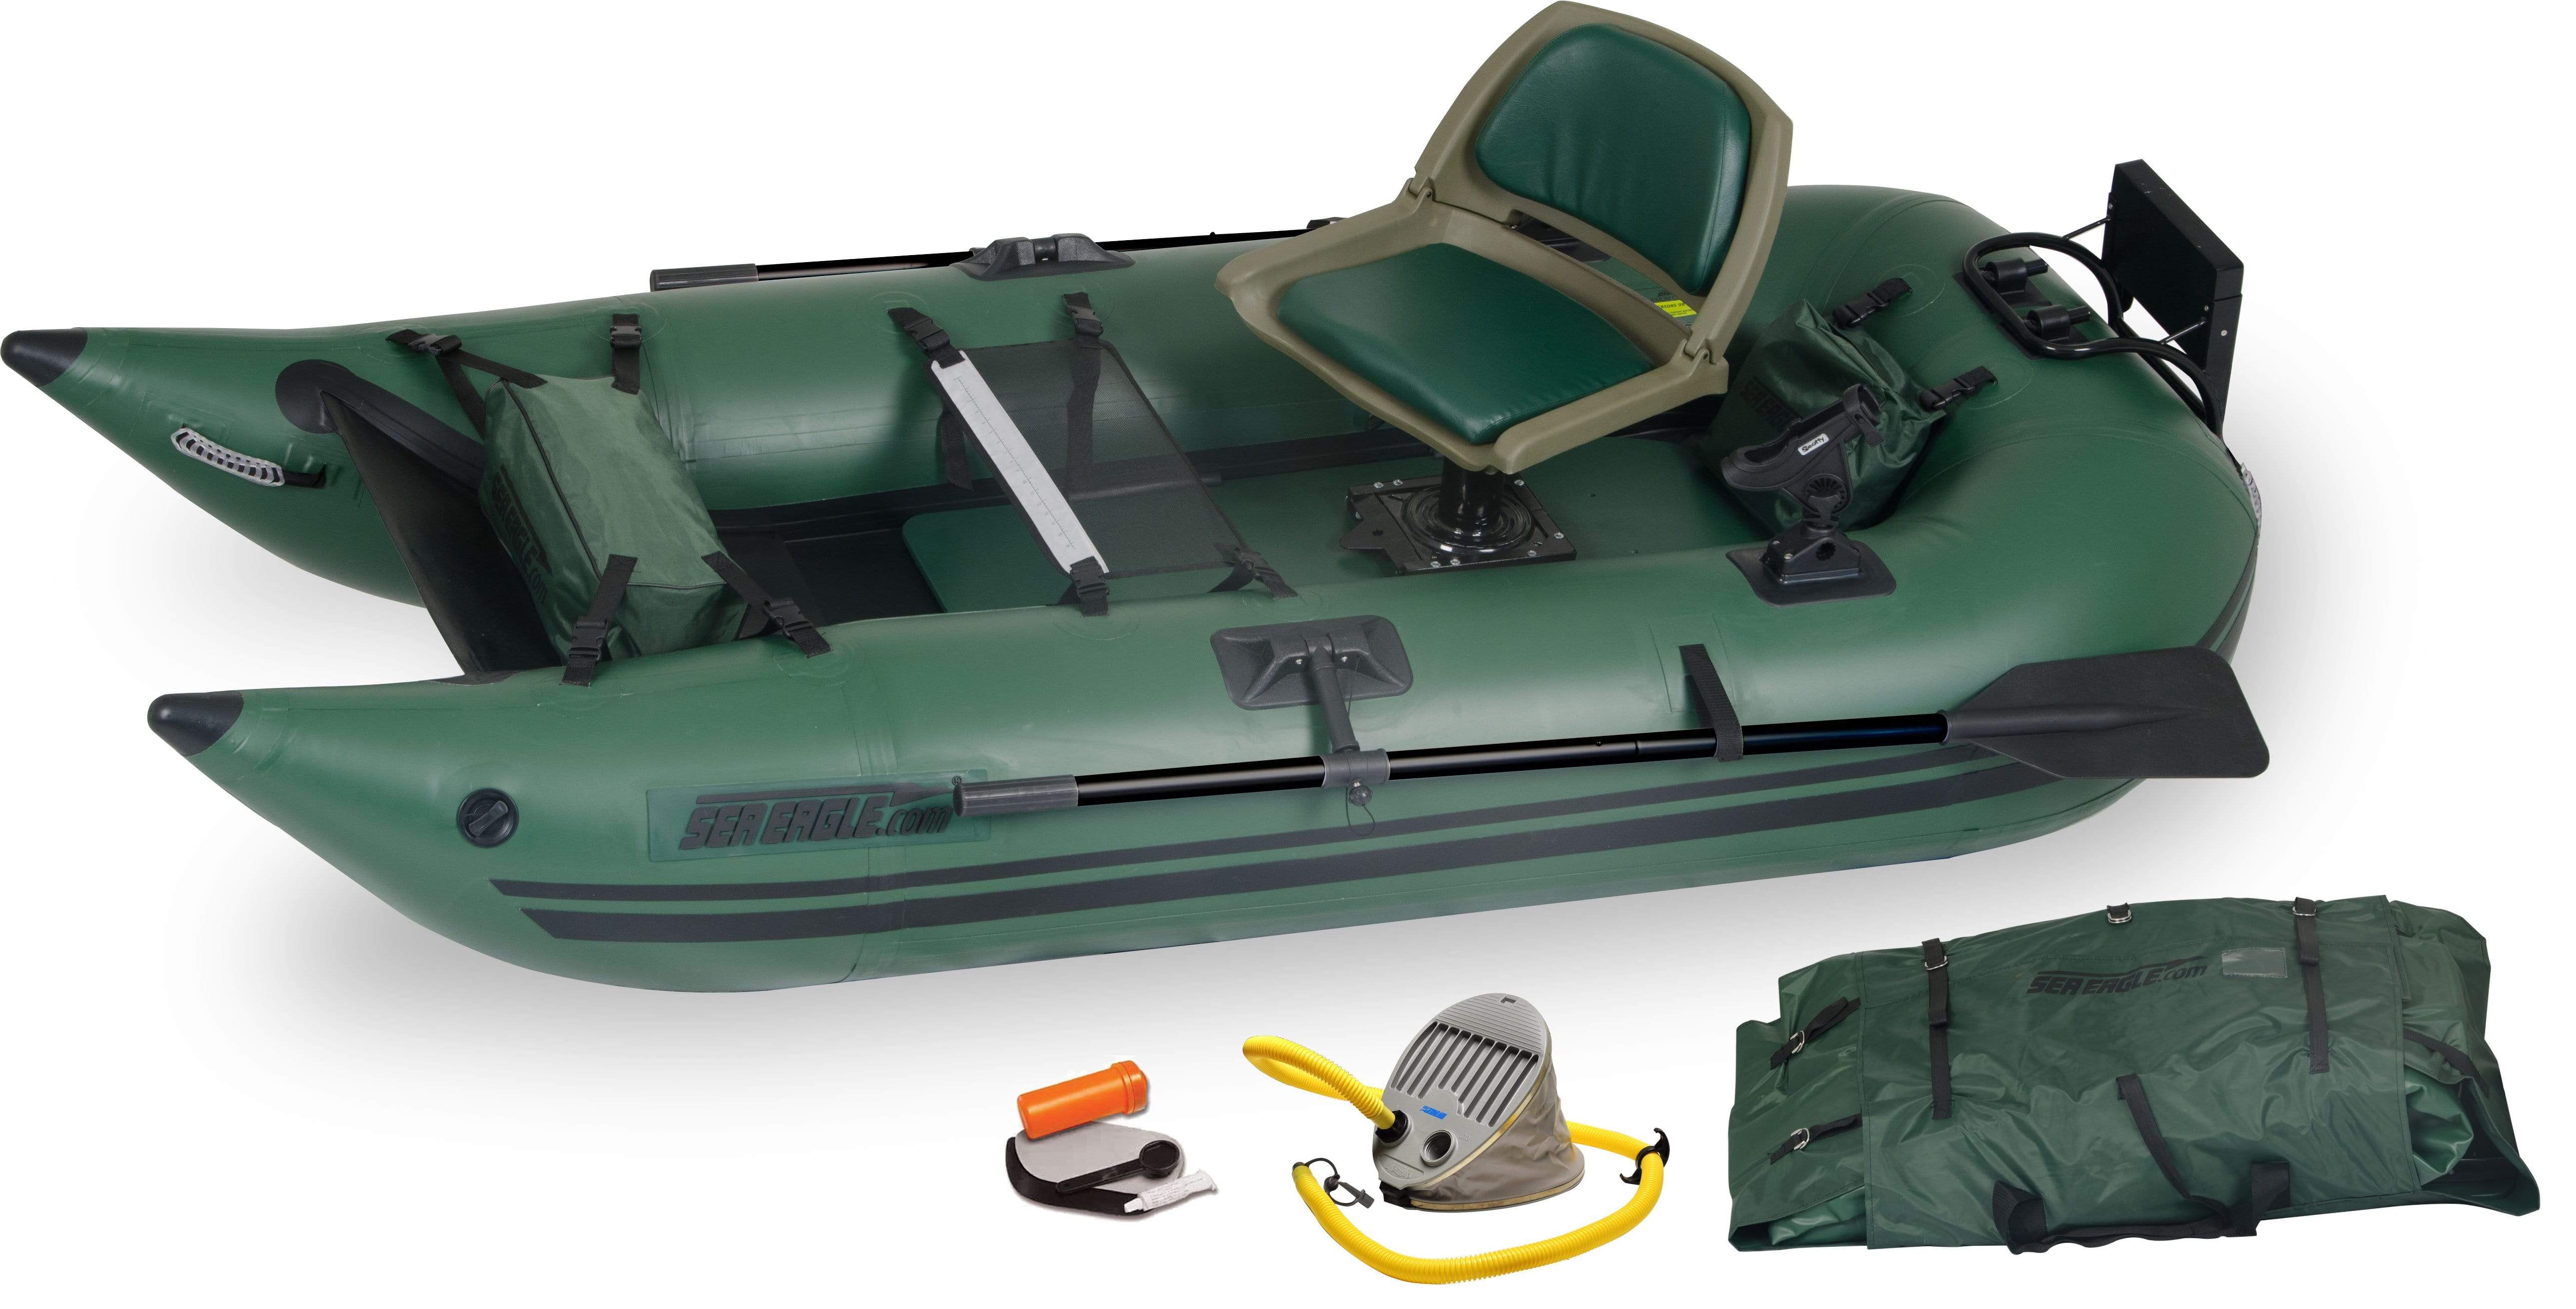 Heavy Duty High Capacity Durable Inflatable Fishing Pontoon Boat Motor Mount